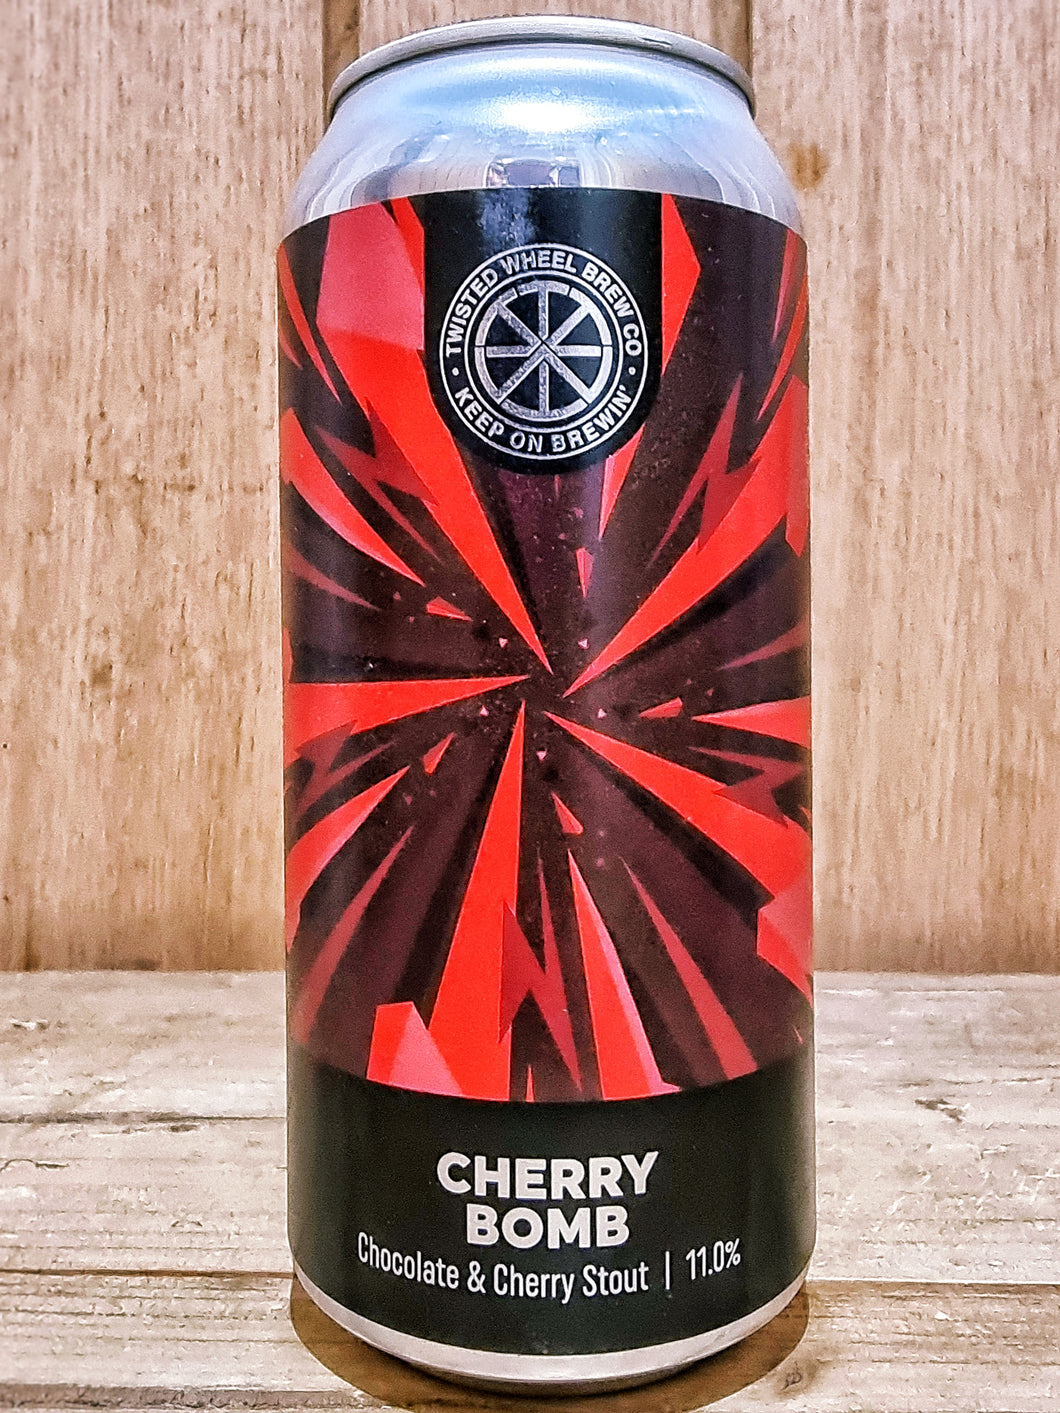 Twisted Wheel Brew Co - Cherry Bomb